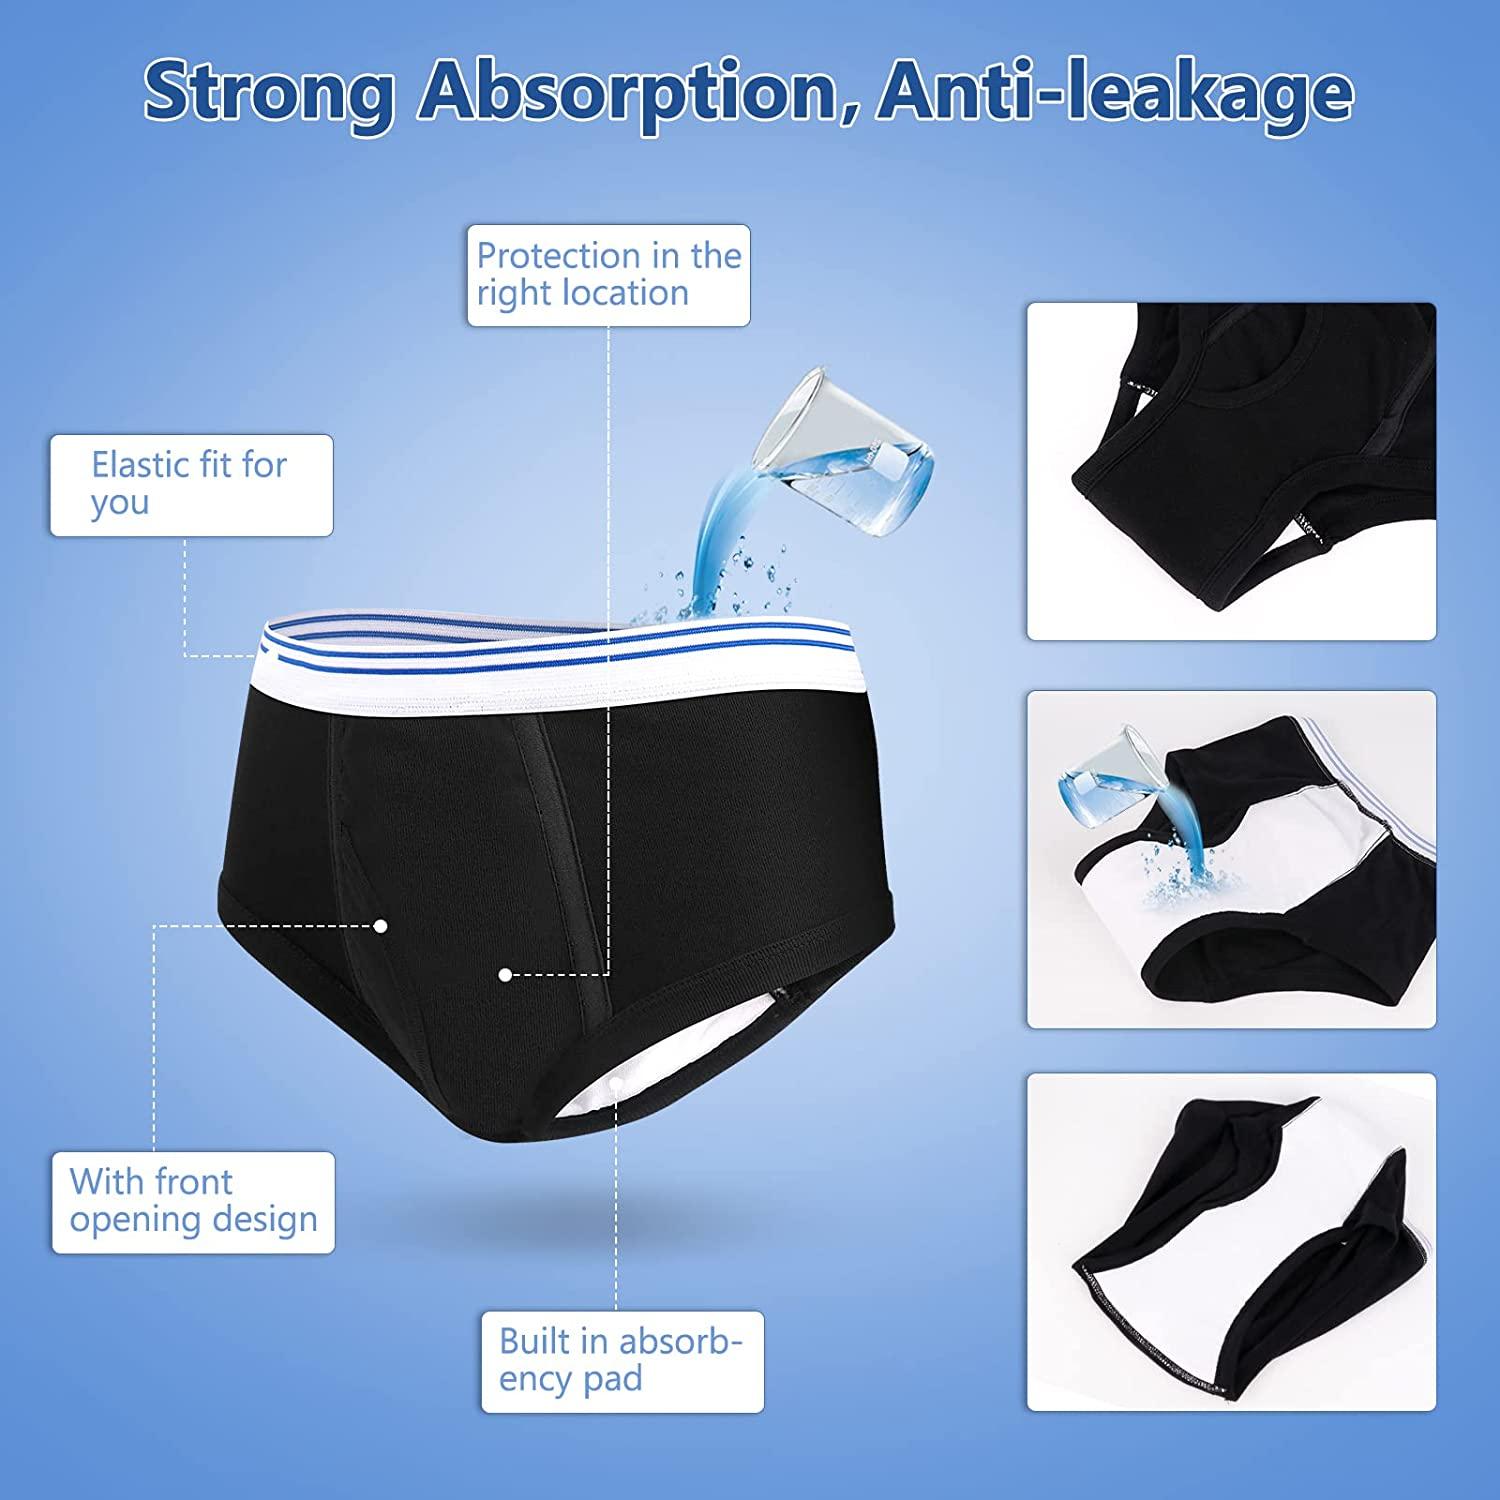 Men's Incontinence Underwear Urinary Briefs with Cotton Pad